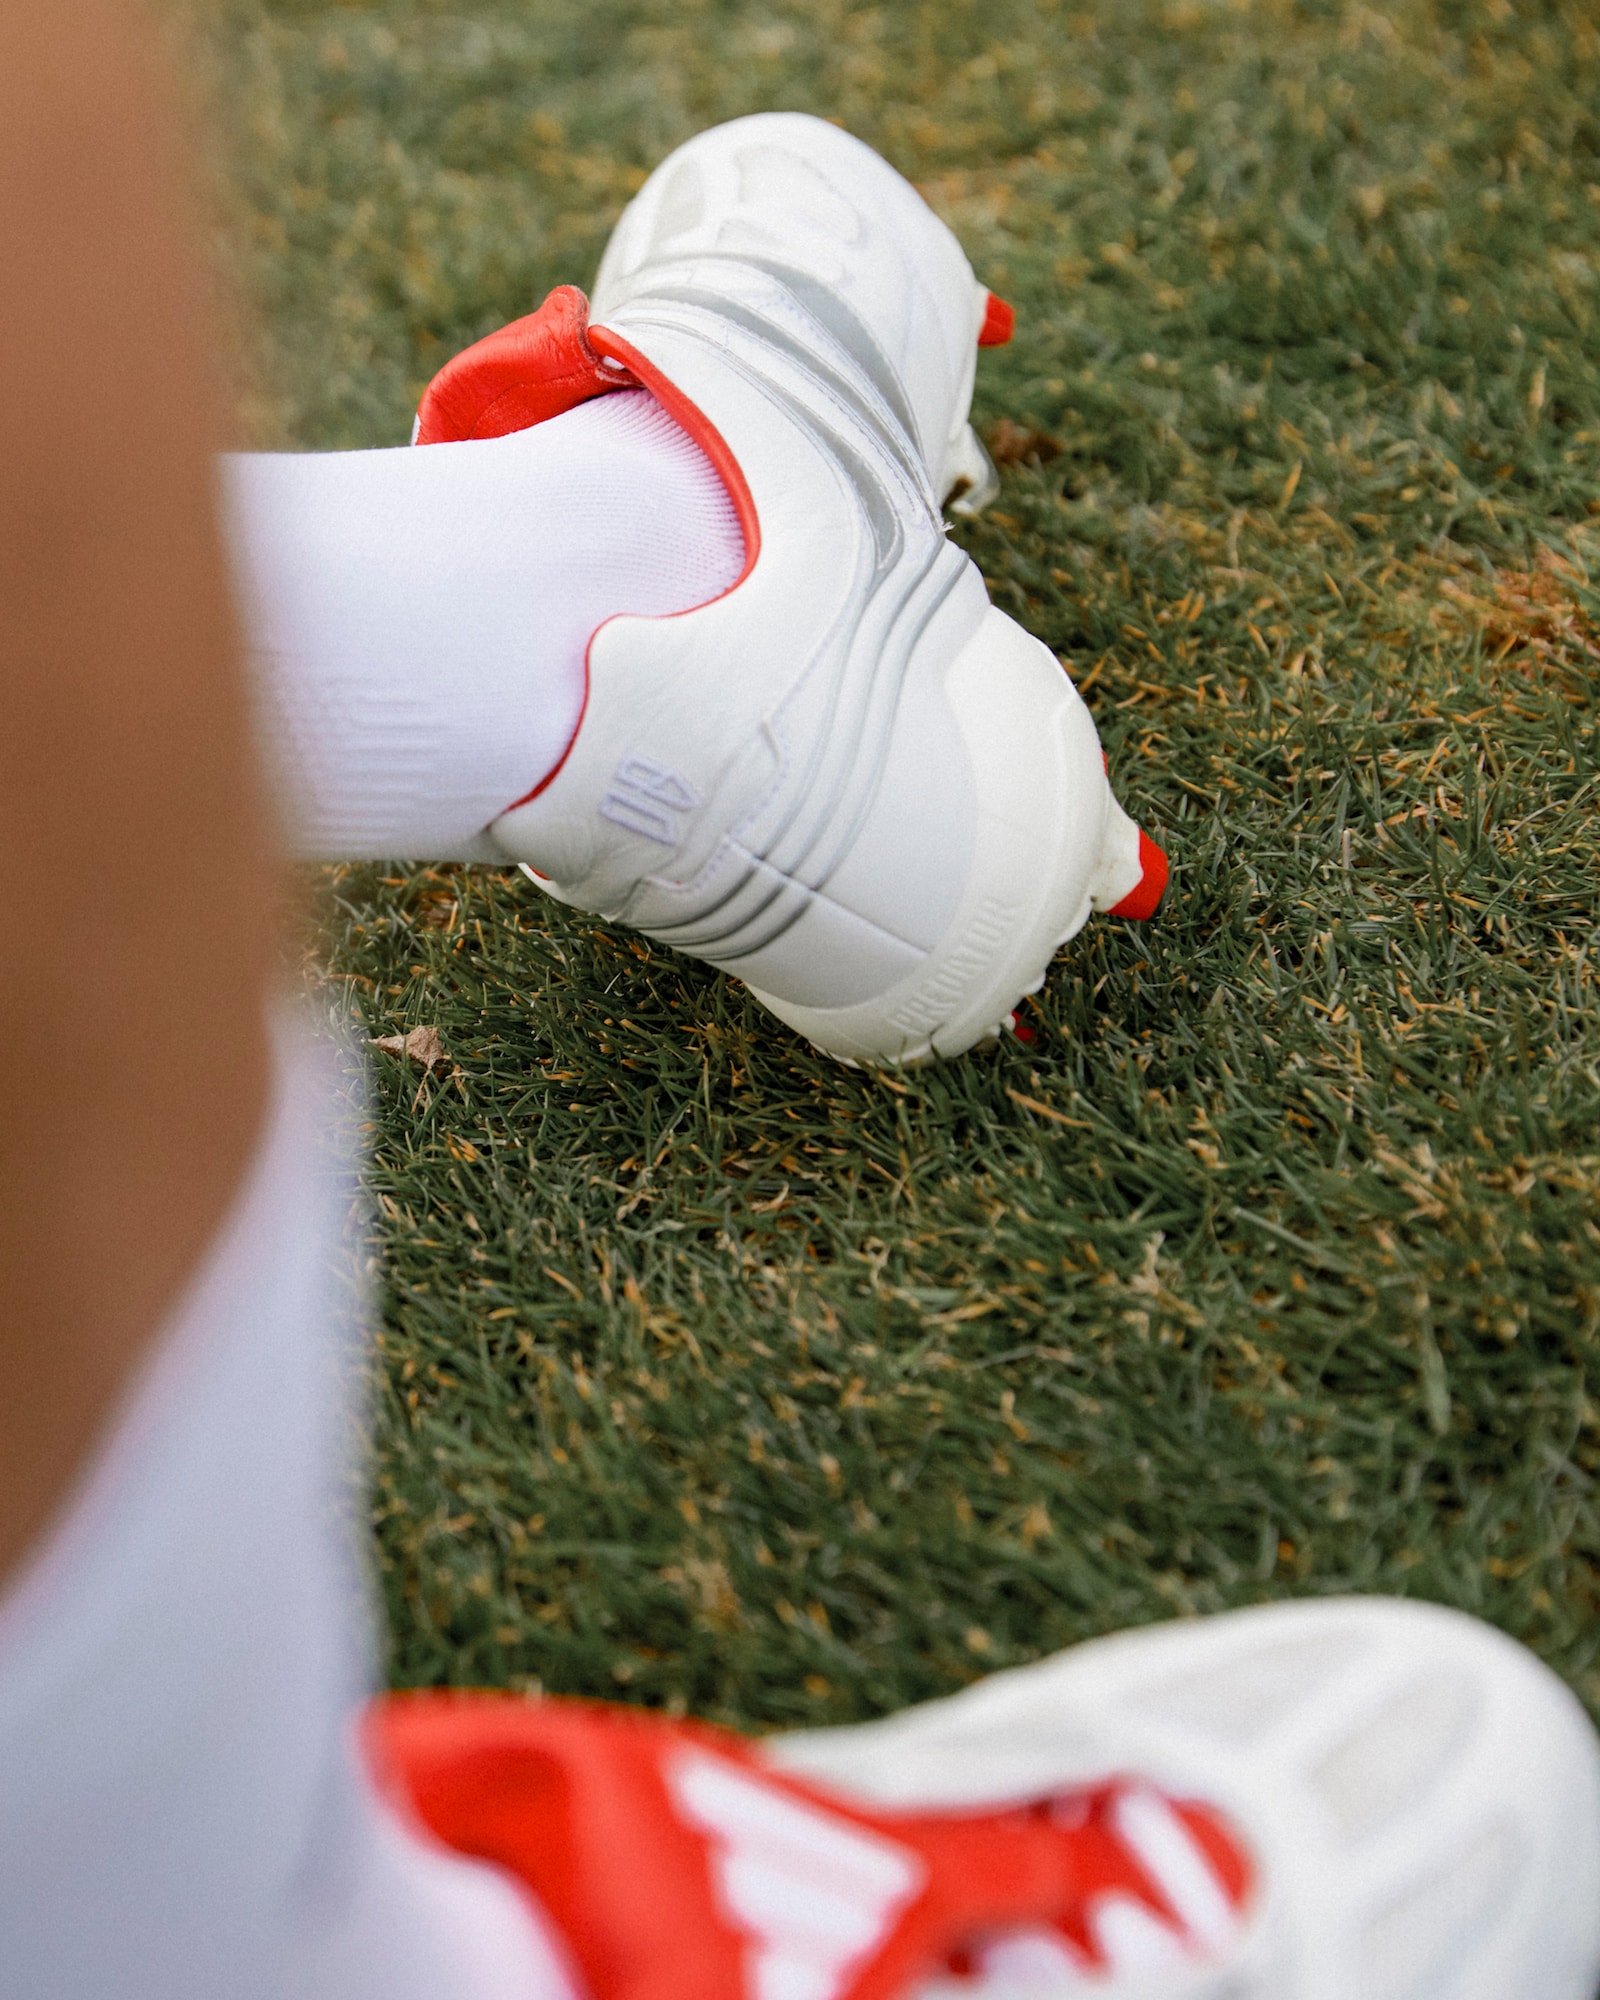 adidas Football 為 Predator 推出 25 週年特別版球靴